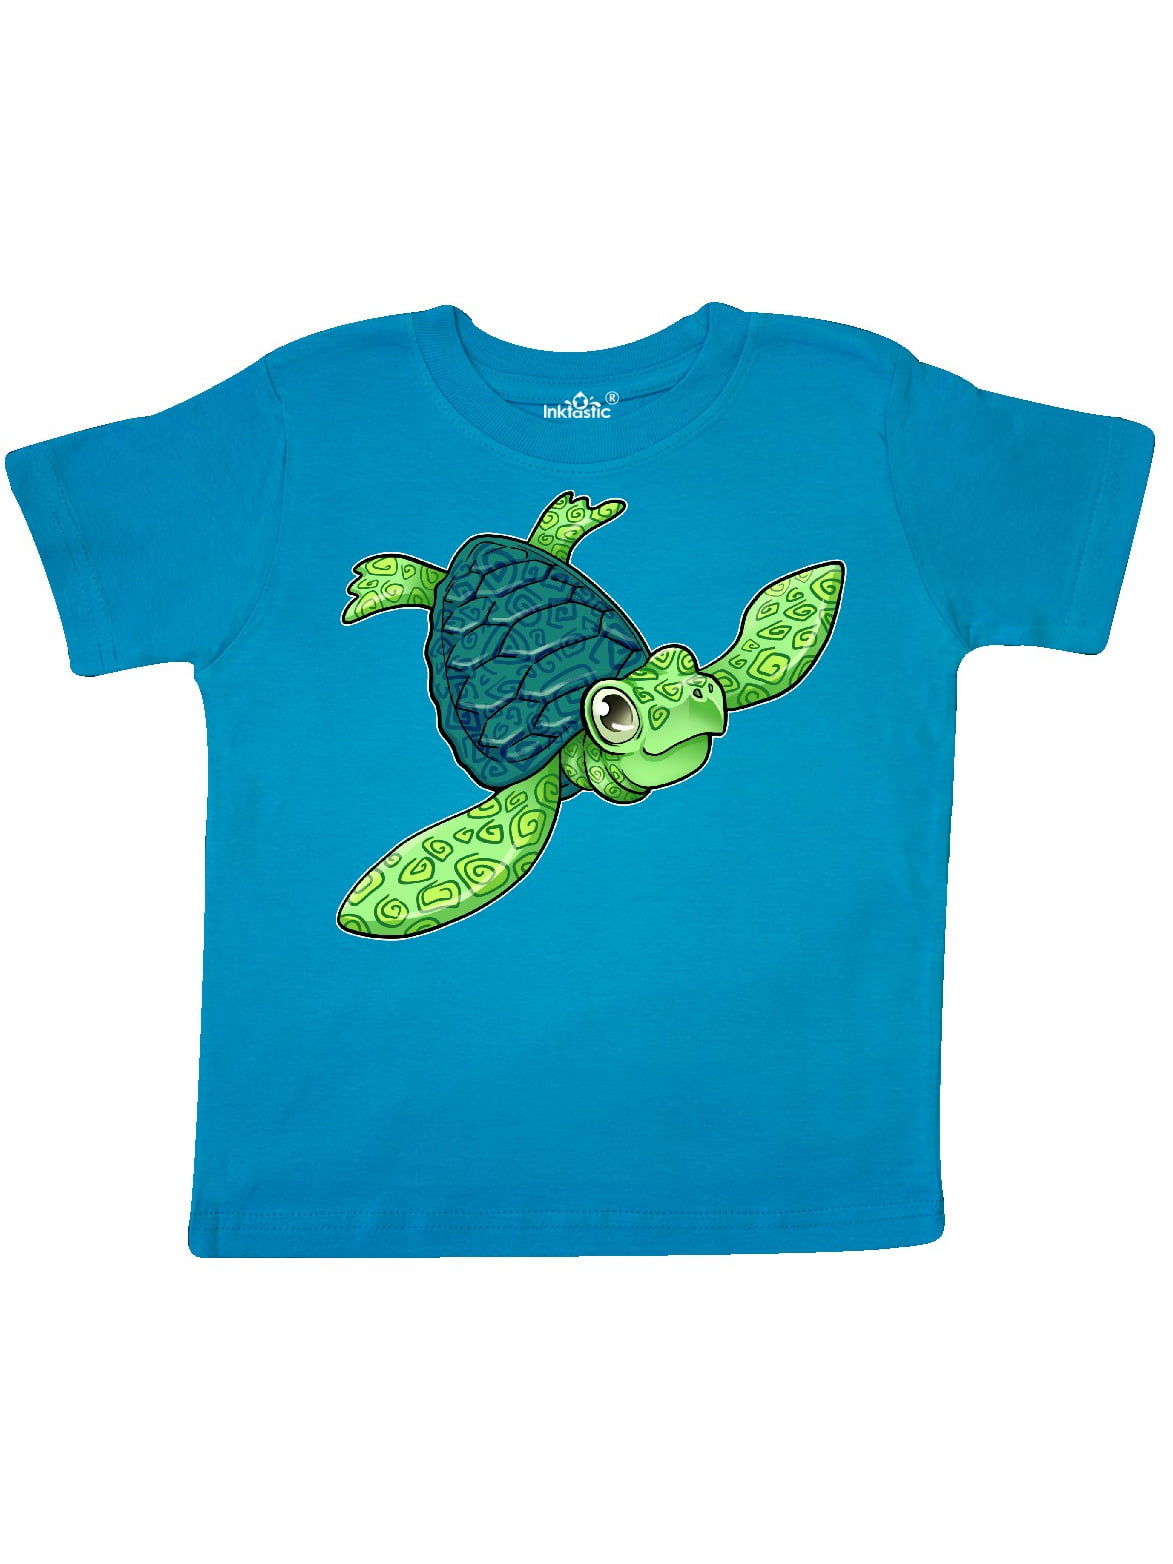 INKtastic - Sea Turtle with swirls Toddler T-Shirt - Walmart.com ...